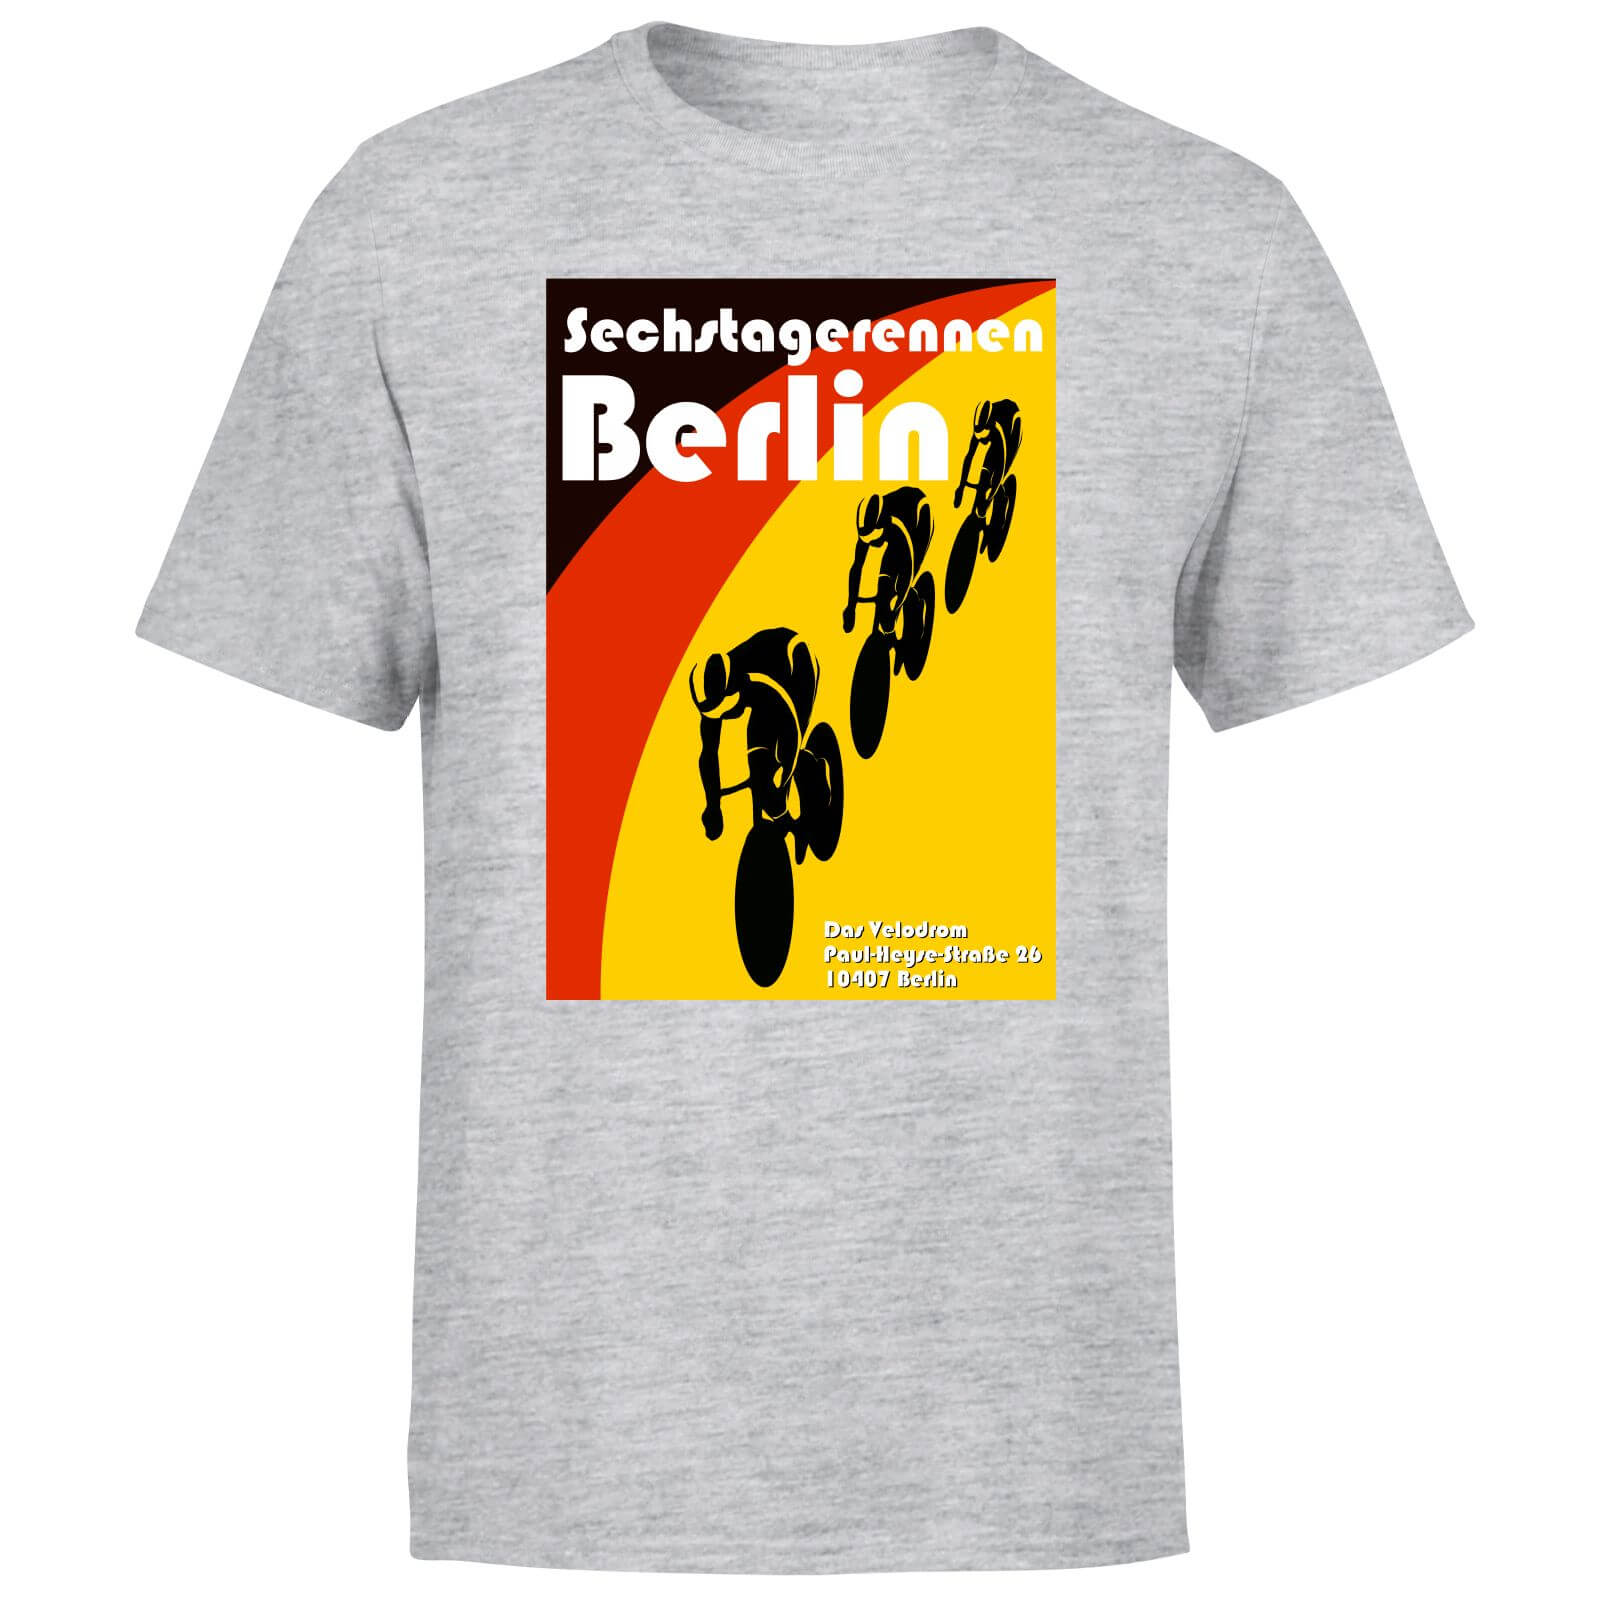 Six Days Berlin Men's T-Shirt - Grey - XL - Grey